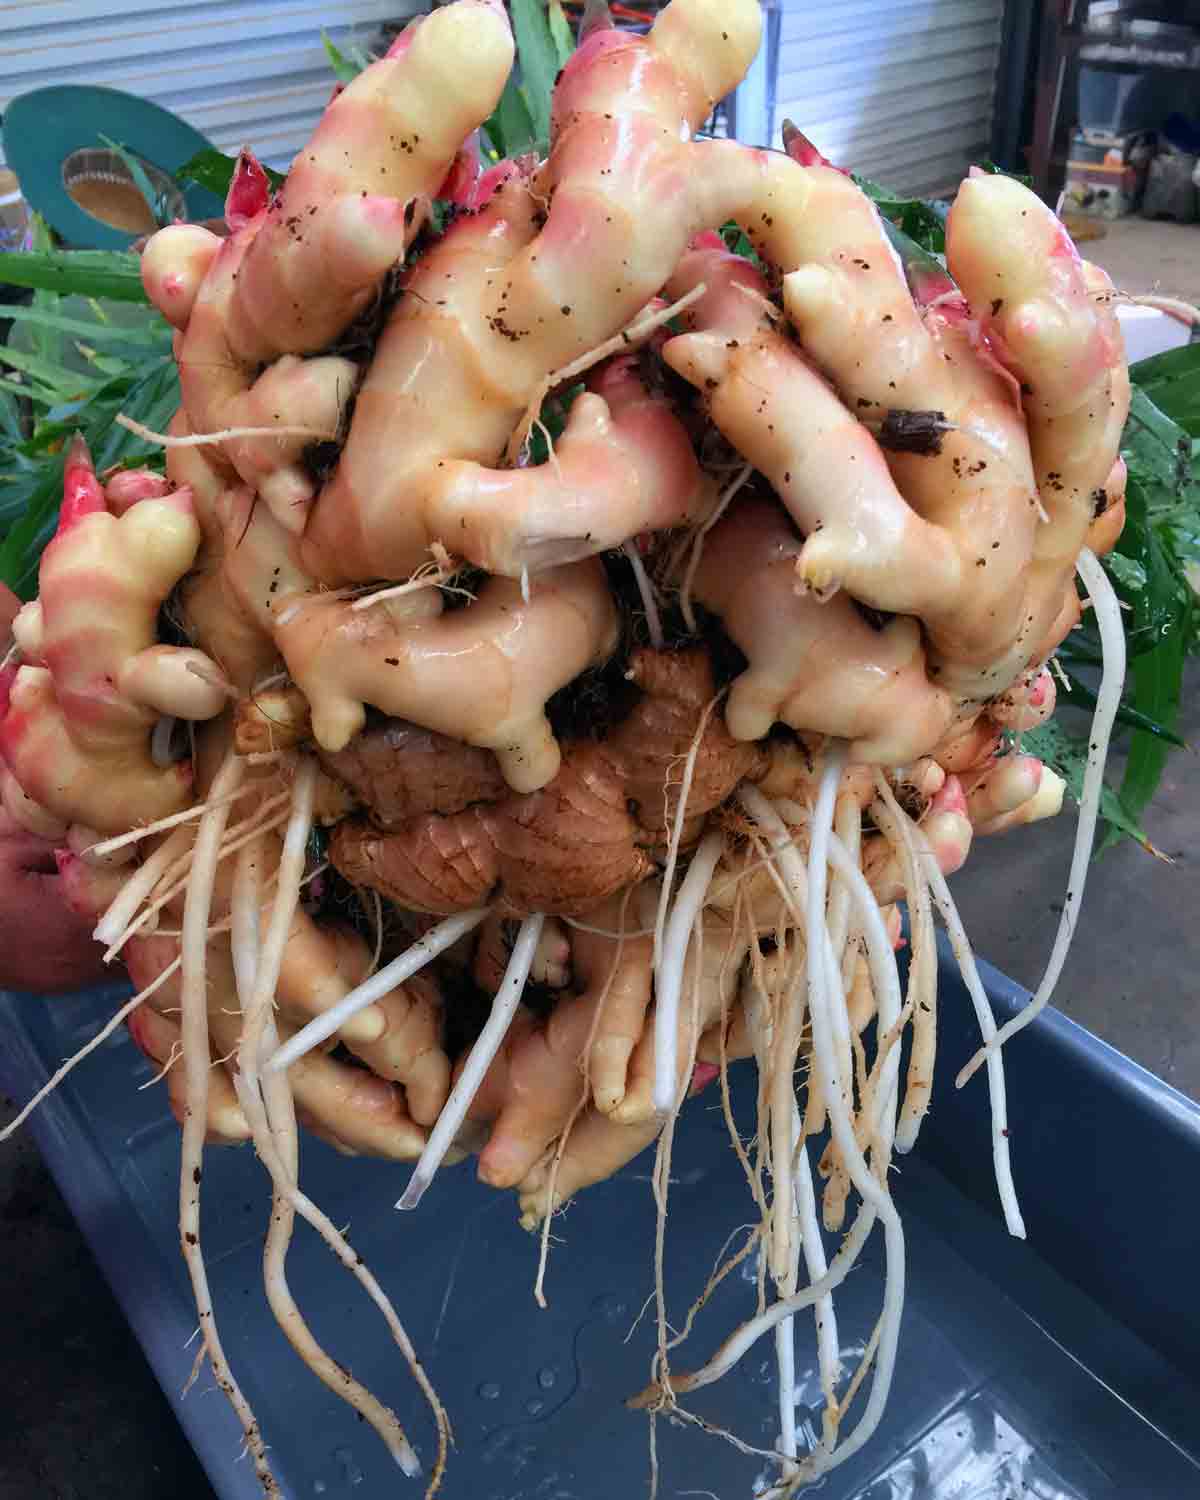 Ginger roots under development in Queensland, Australia